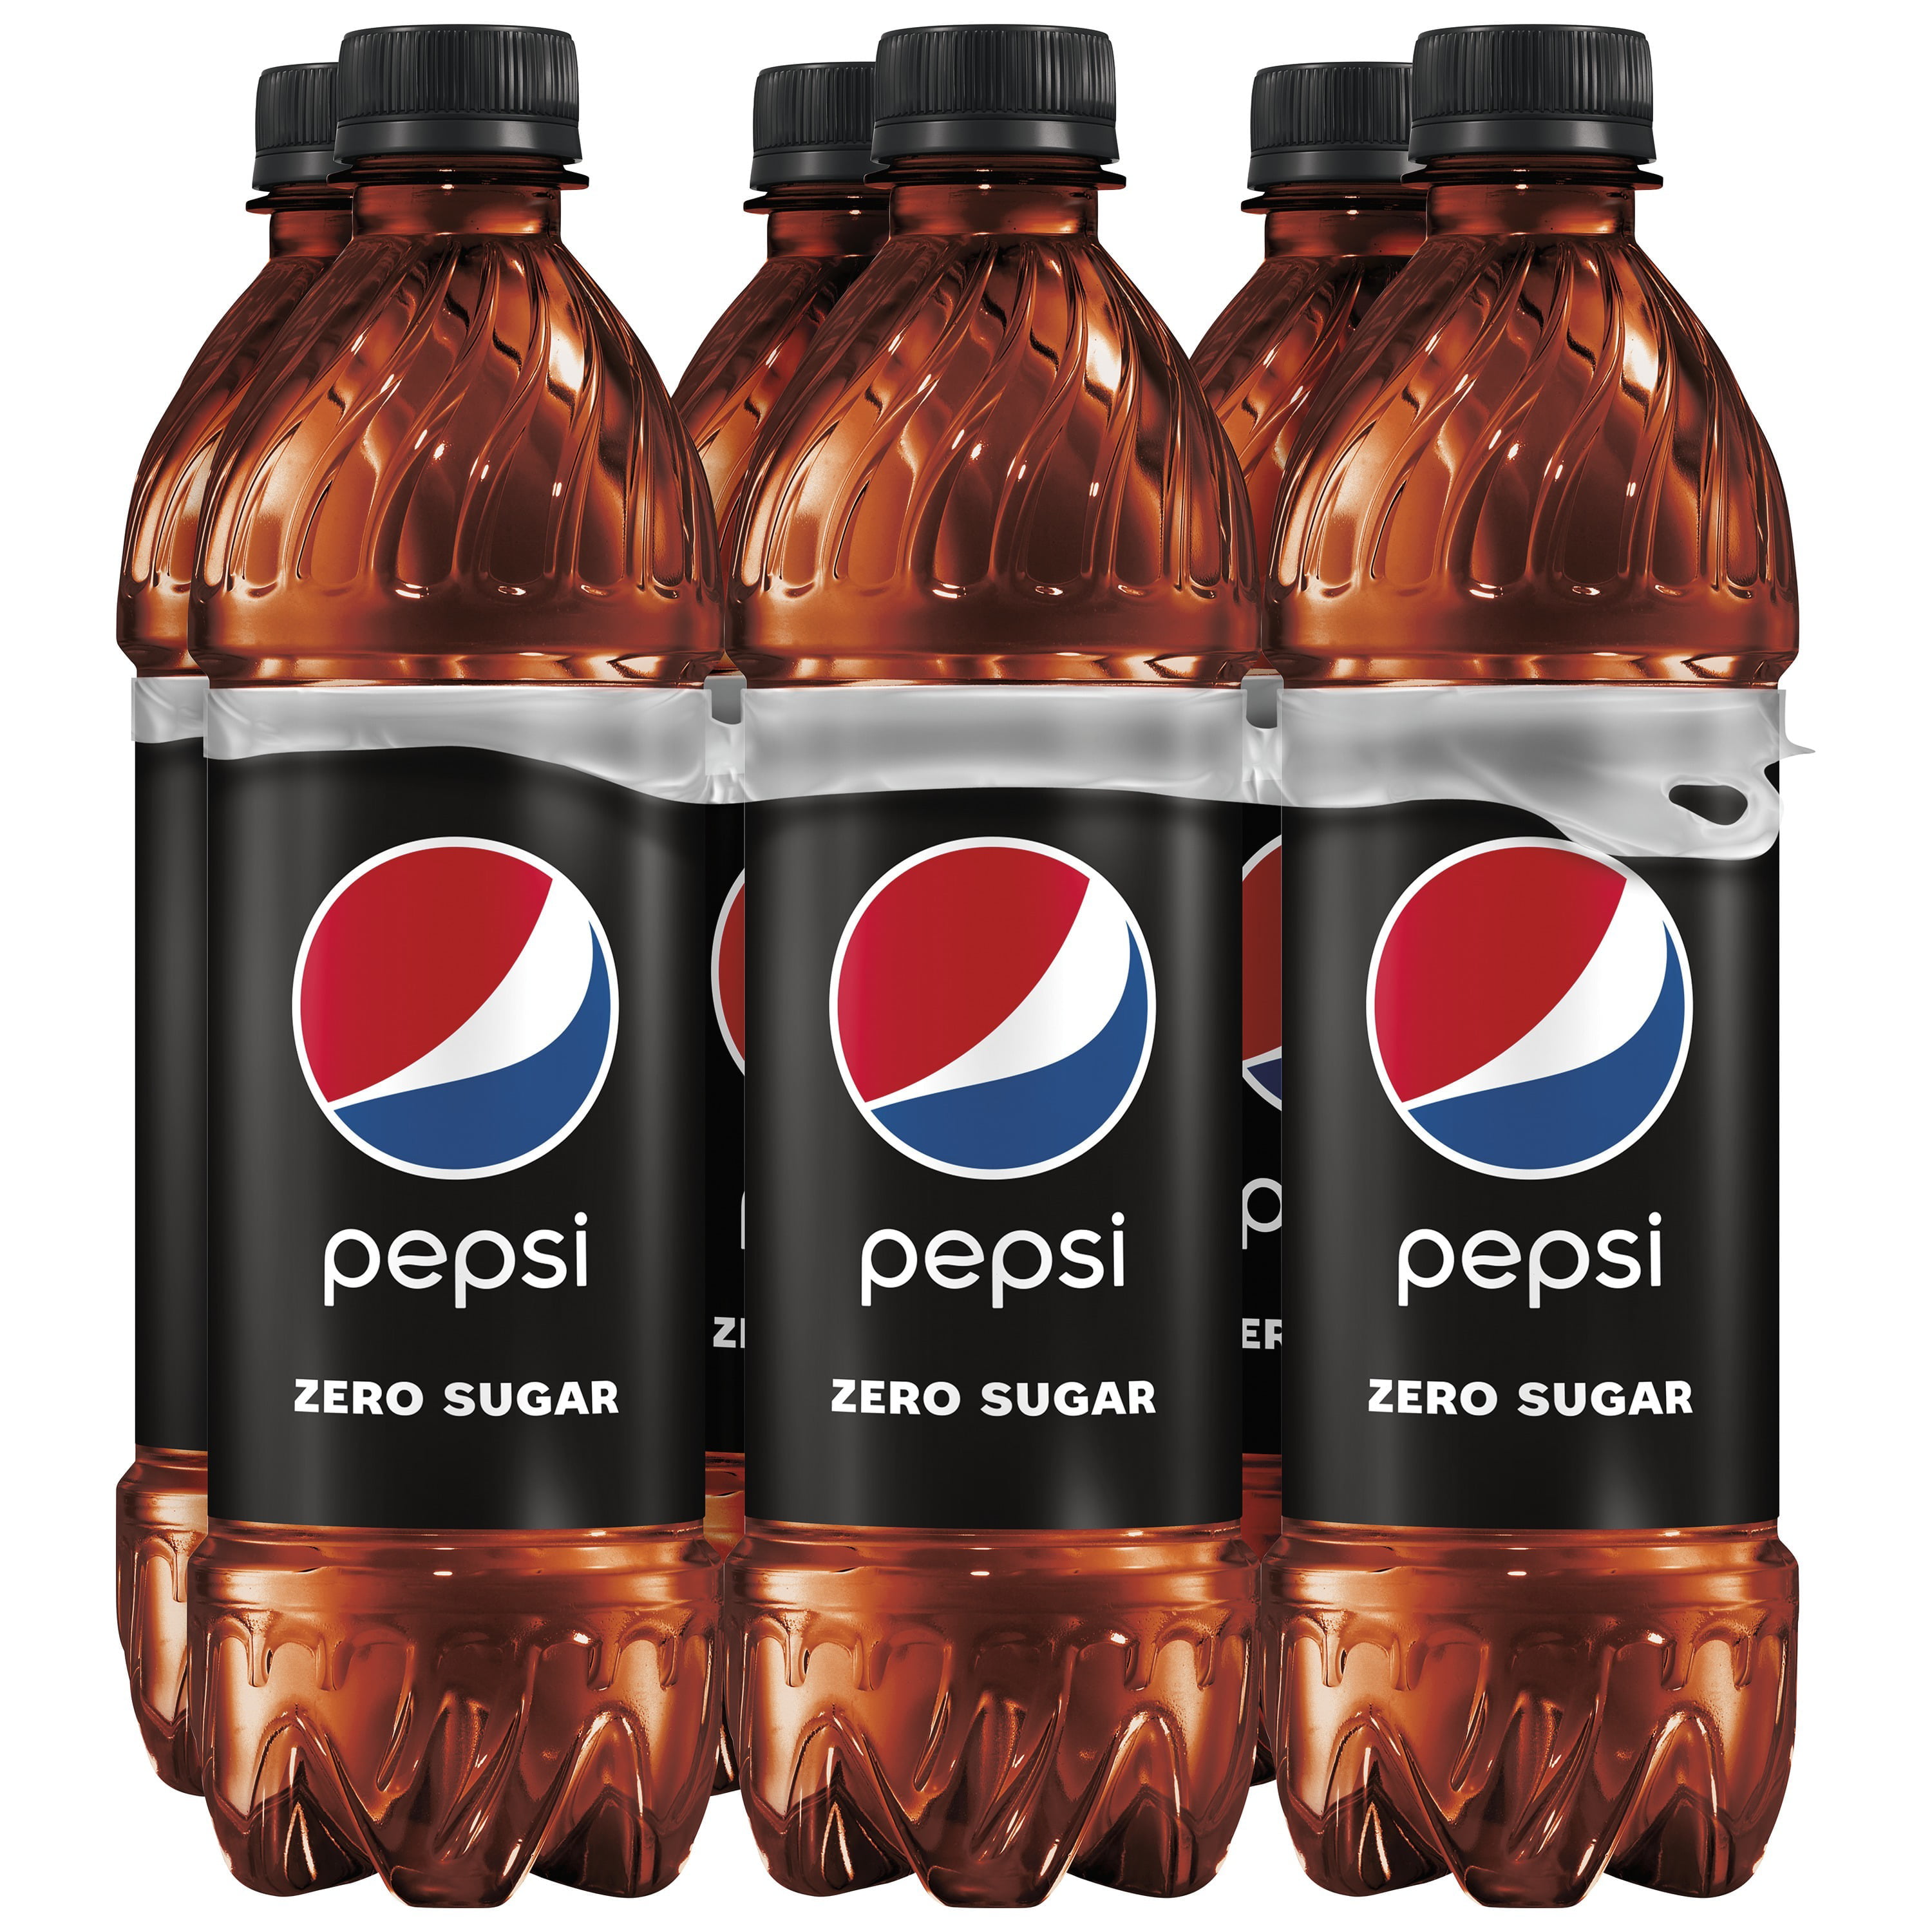 Pepsi Cola Zero Sugar Soda Pop, 16.9 fl oz, 6 Pack Bottles